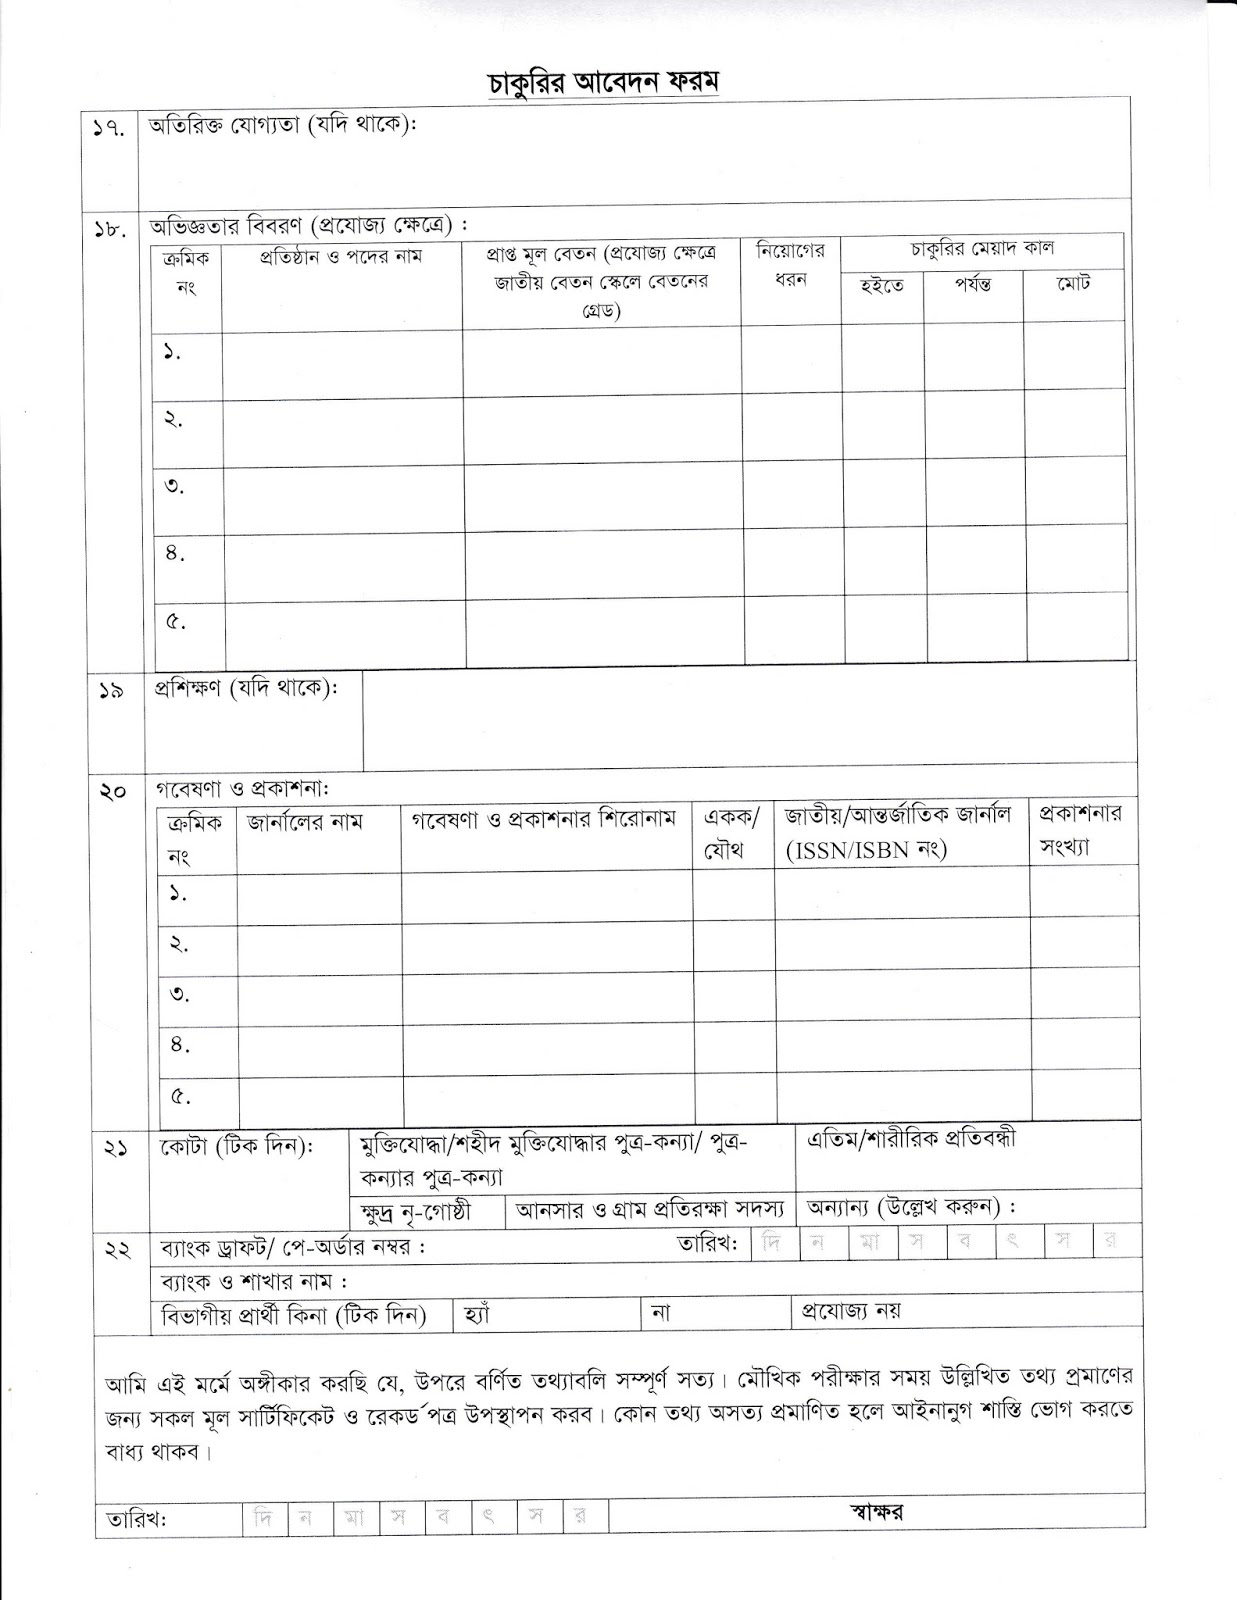 Bangabandhu Sheikh Mujibur Rahman Maritime University (BSMRMU) Job Application Form